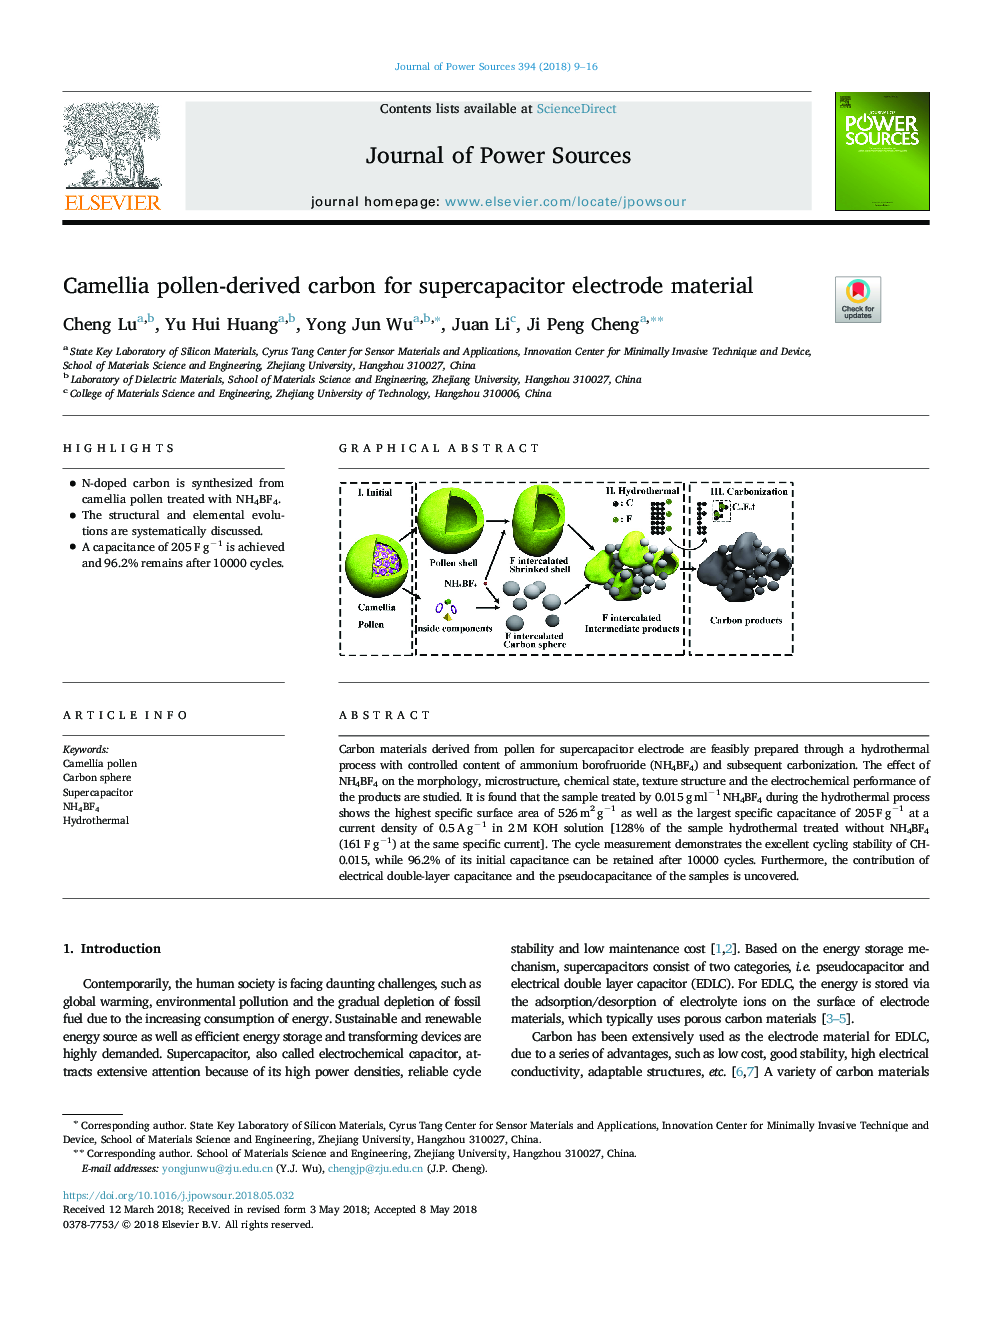 Camellia pollen-derived carbon for supercapacitor electrode material